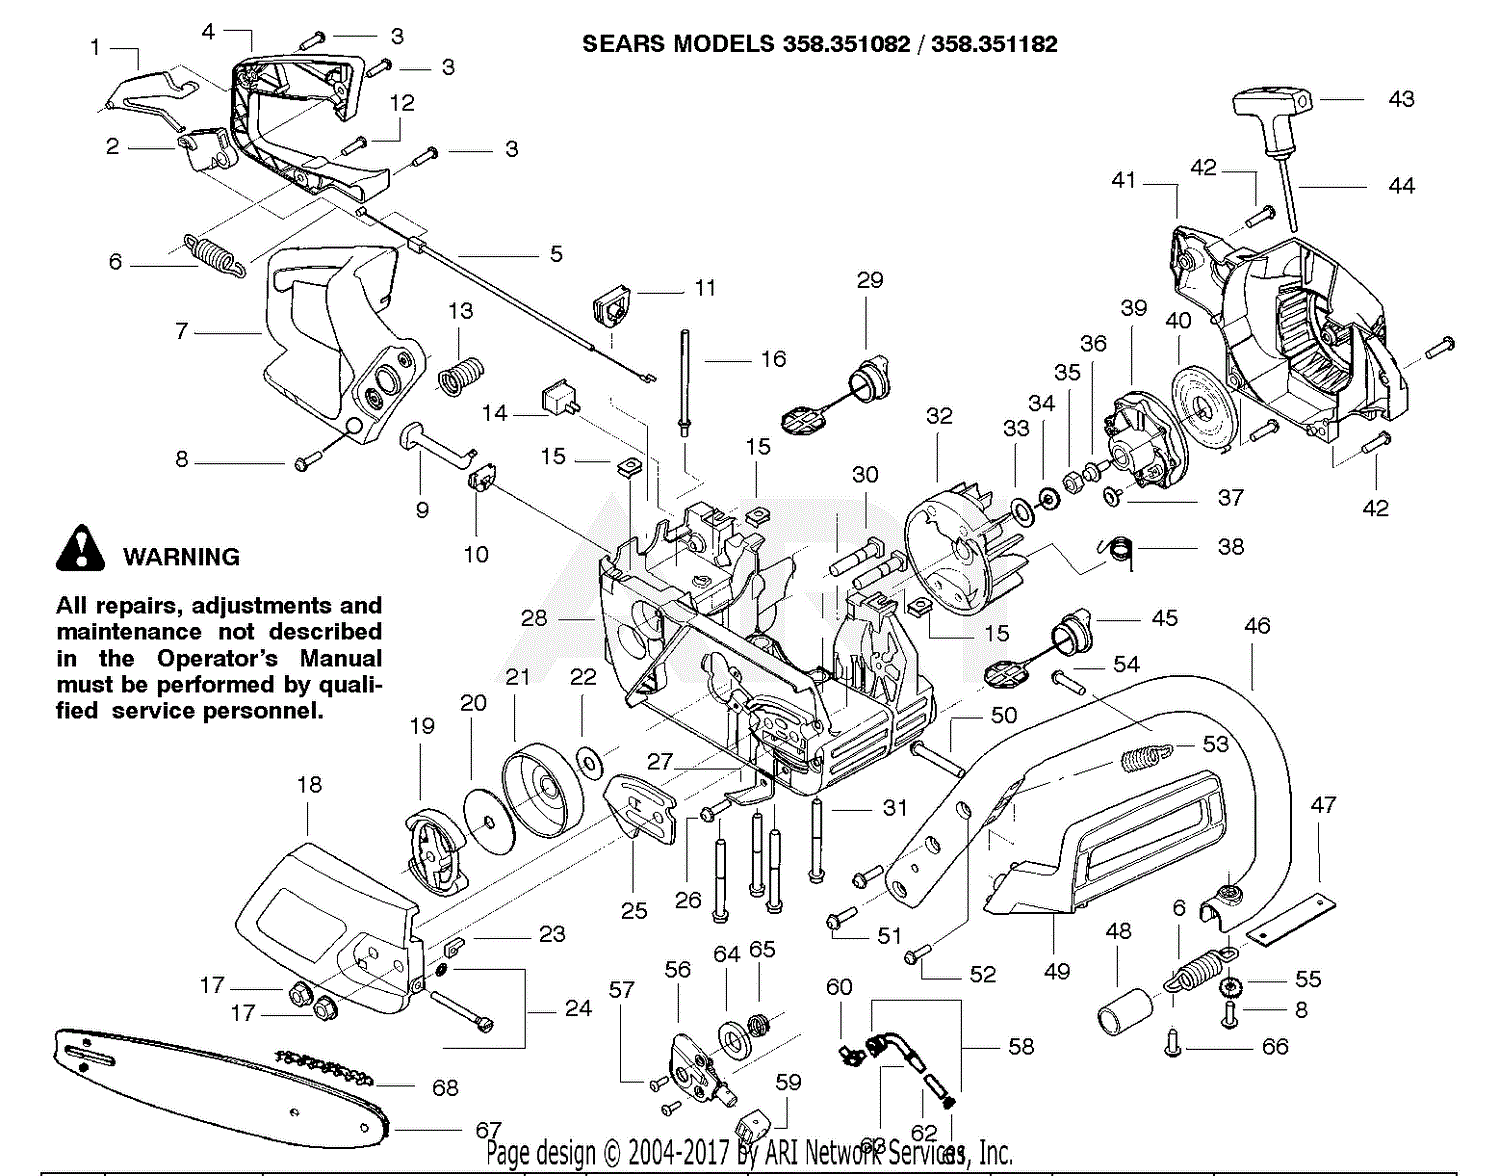 Poulan Pro Chainsaw Parts Diagram Pp4218avx - Free Wiring Diagram